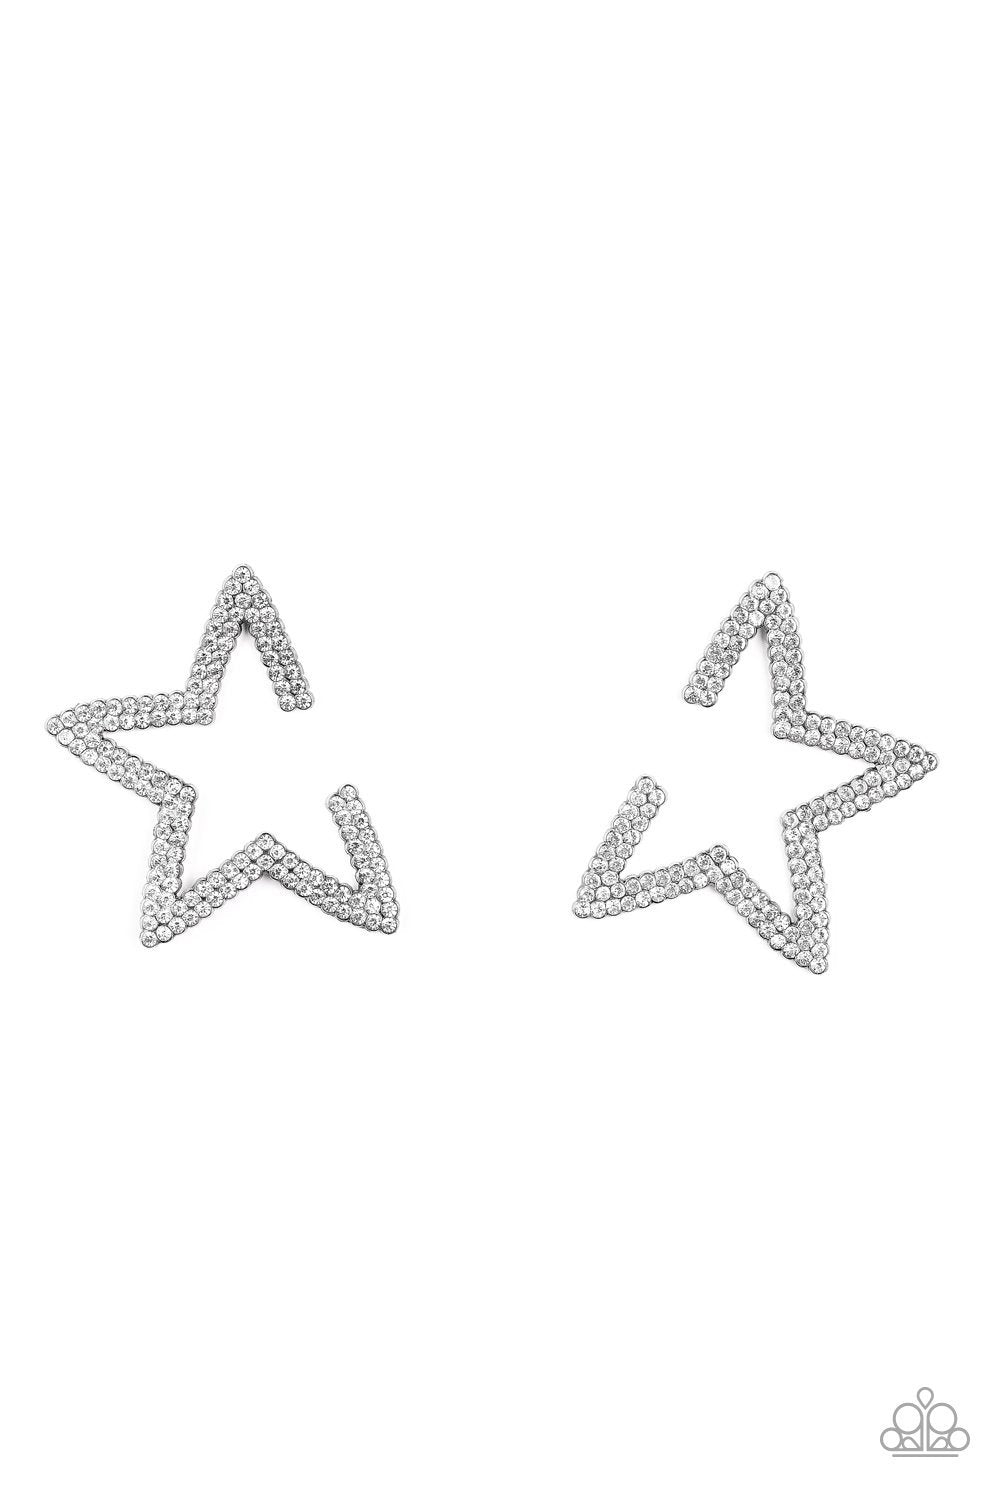 Star Player Gunmetal Black and White Rhinestone Earrings - Paparazzi Accessories - lightbox -CarasShop.com - $5 Jewelry by Cara Jewels